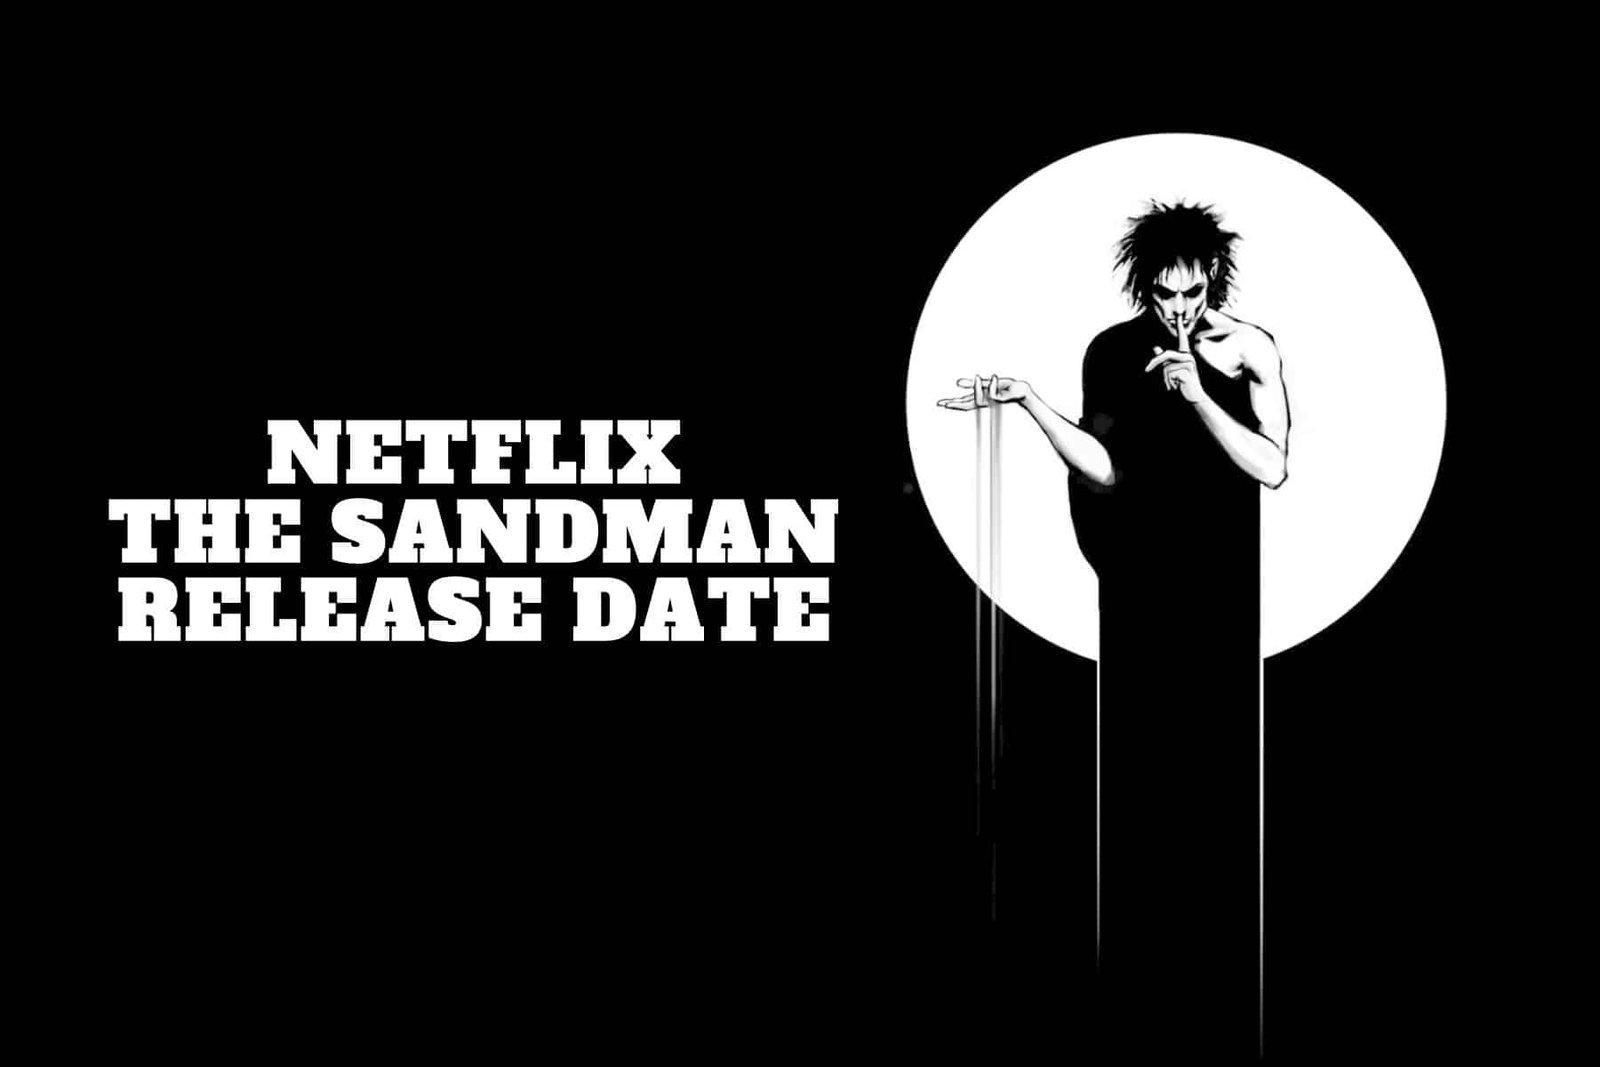 Netflix The Sandman Release Date, Trailer - Is it Canceled?